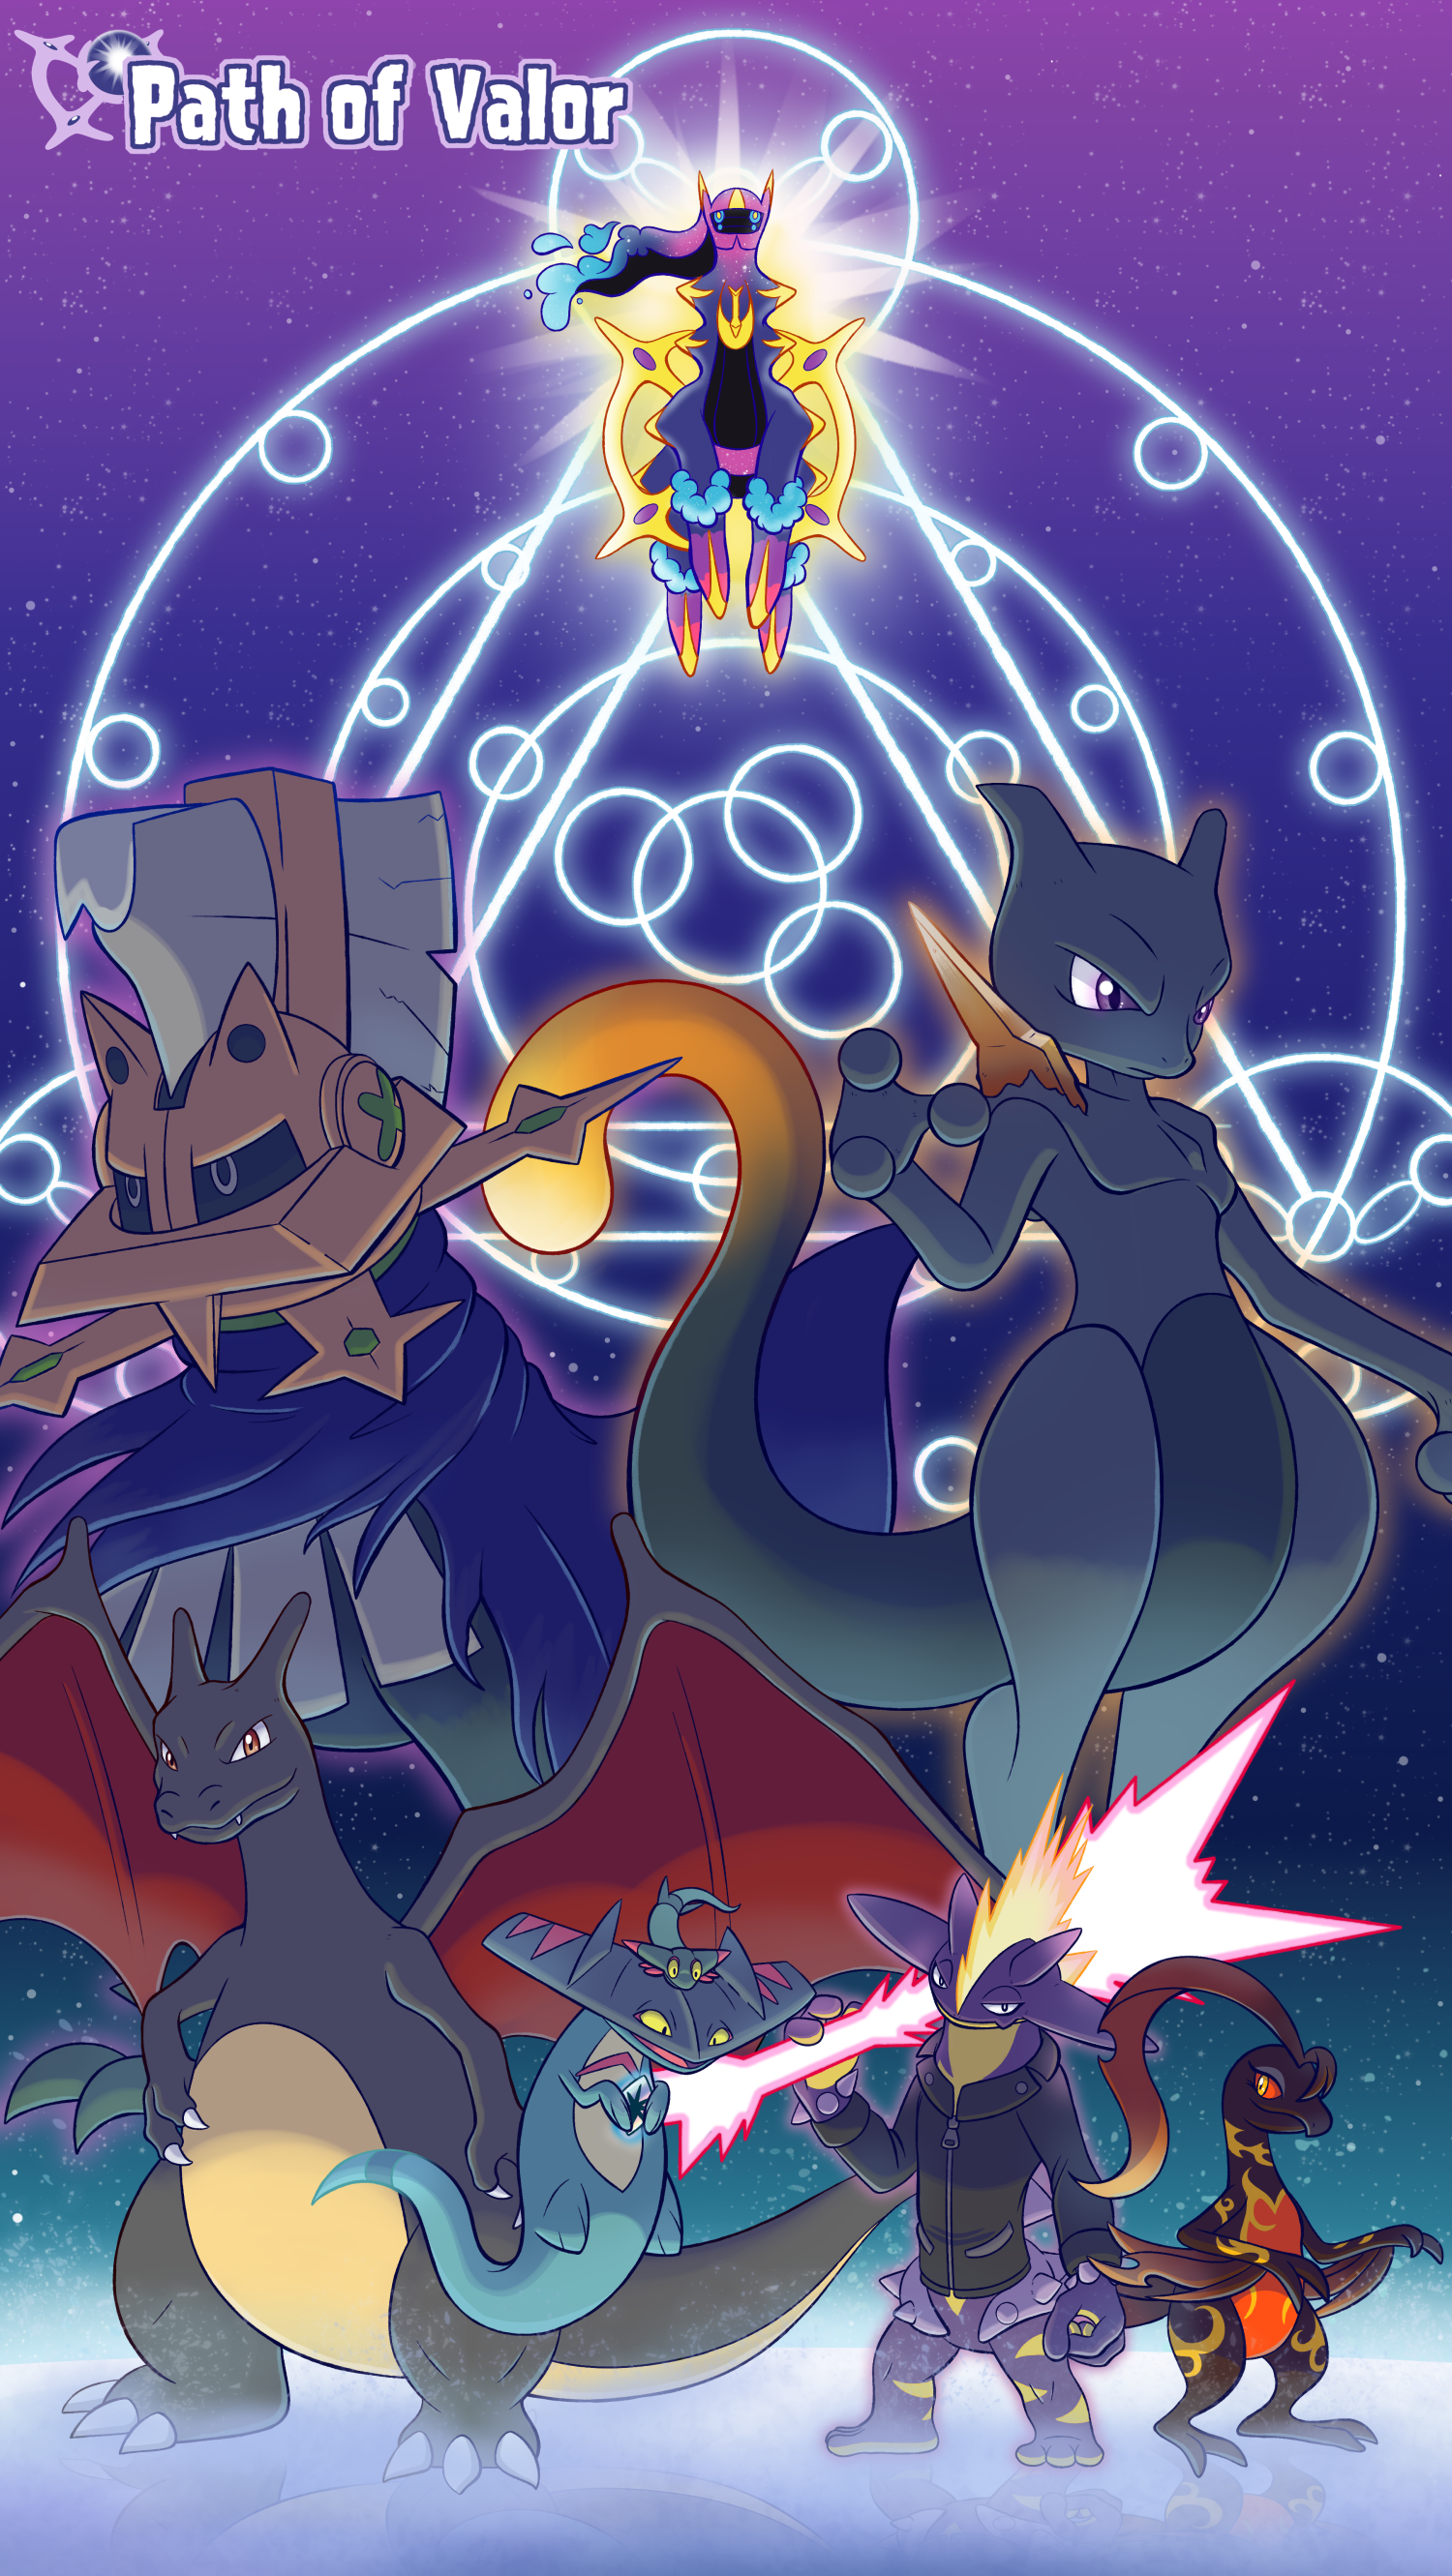 galar legendaries - Ask Questions - Pokémon Vortex Forums